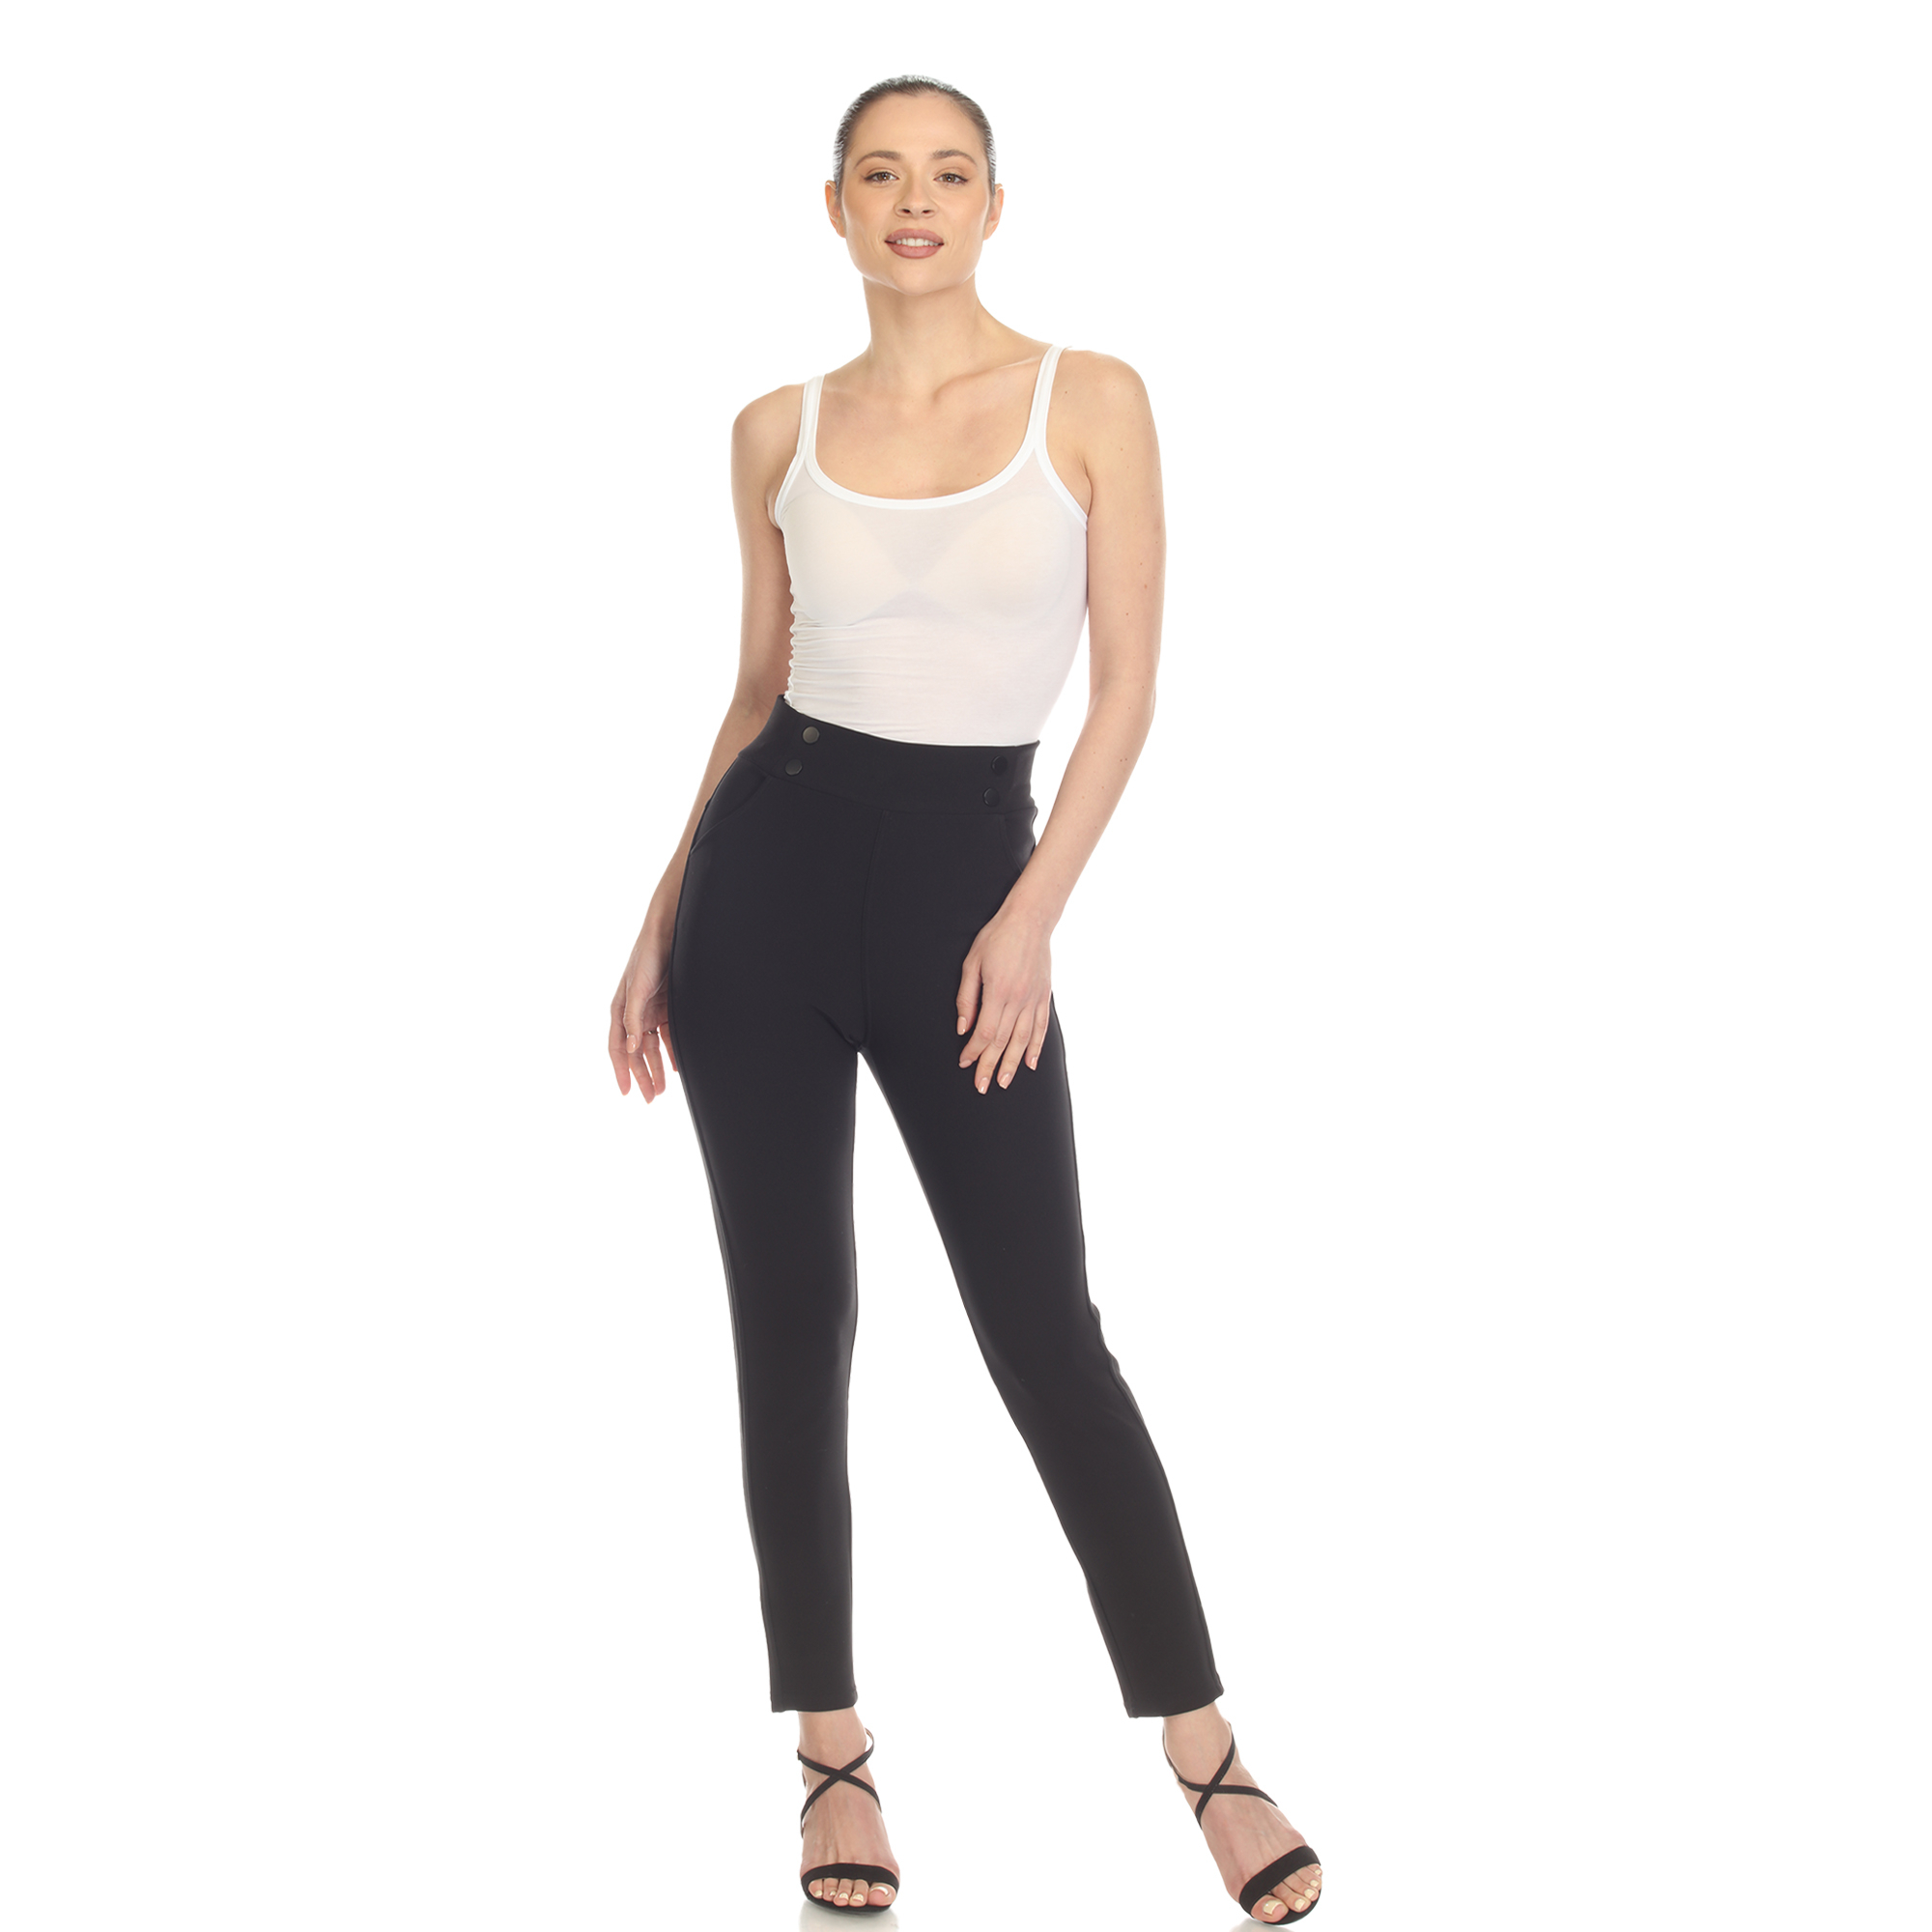 White Mark Women's Super Soft Elastic Waistband High Waist Scuba Pants With Pockets - Black, 2X